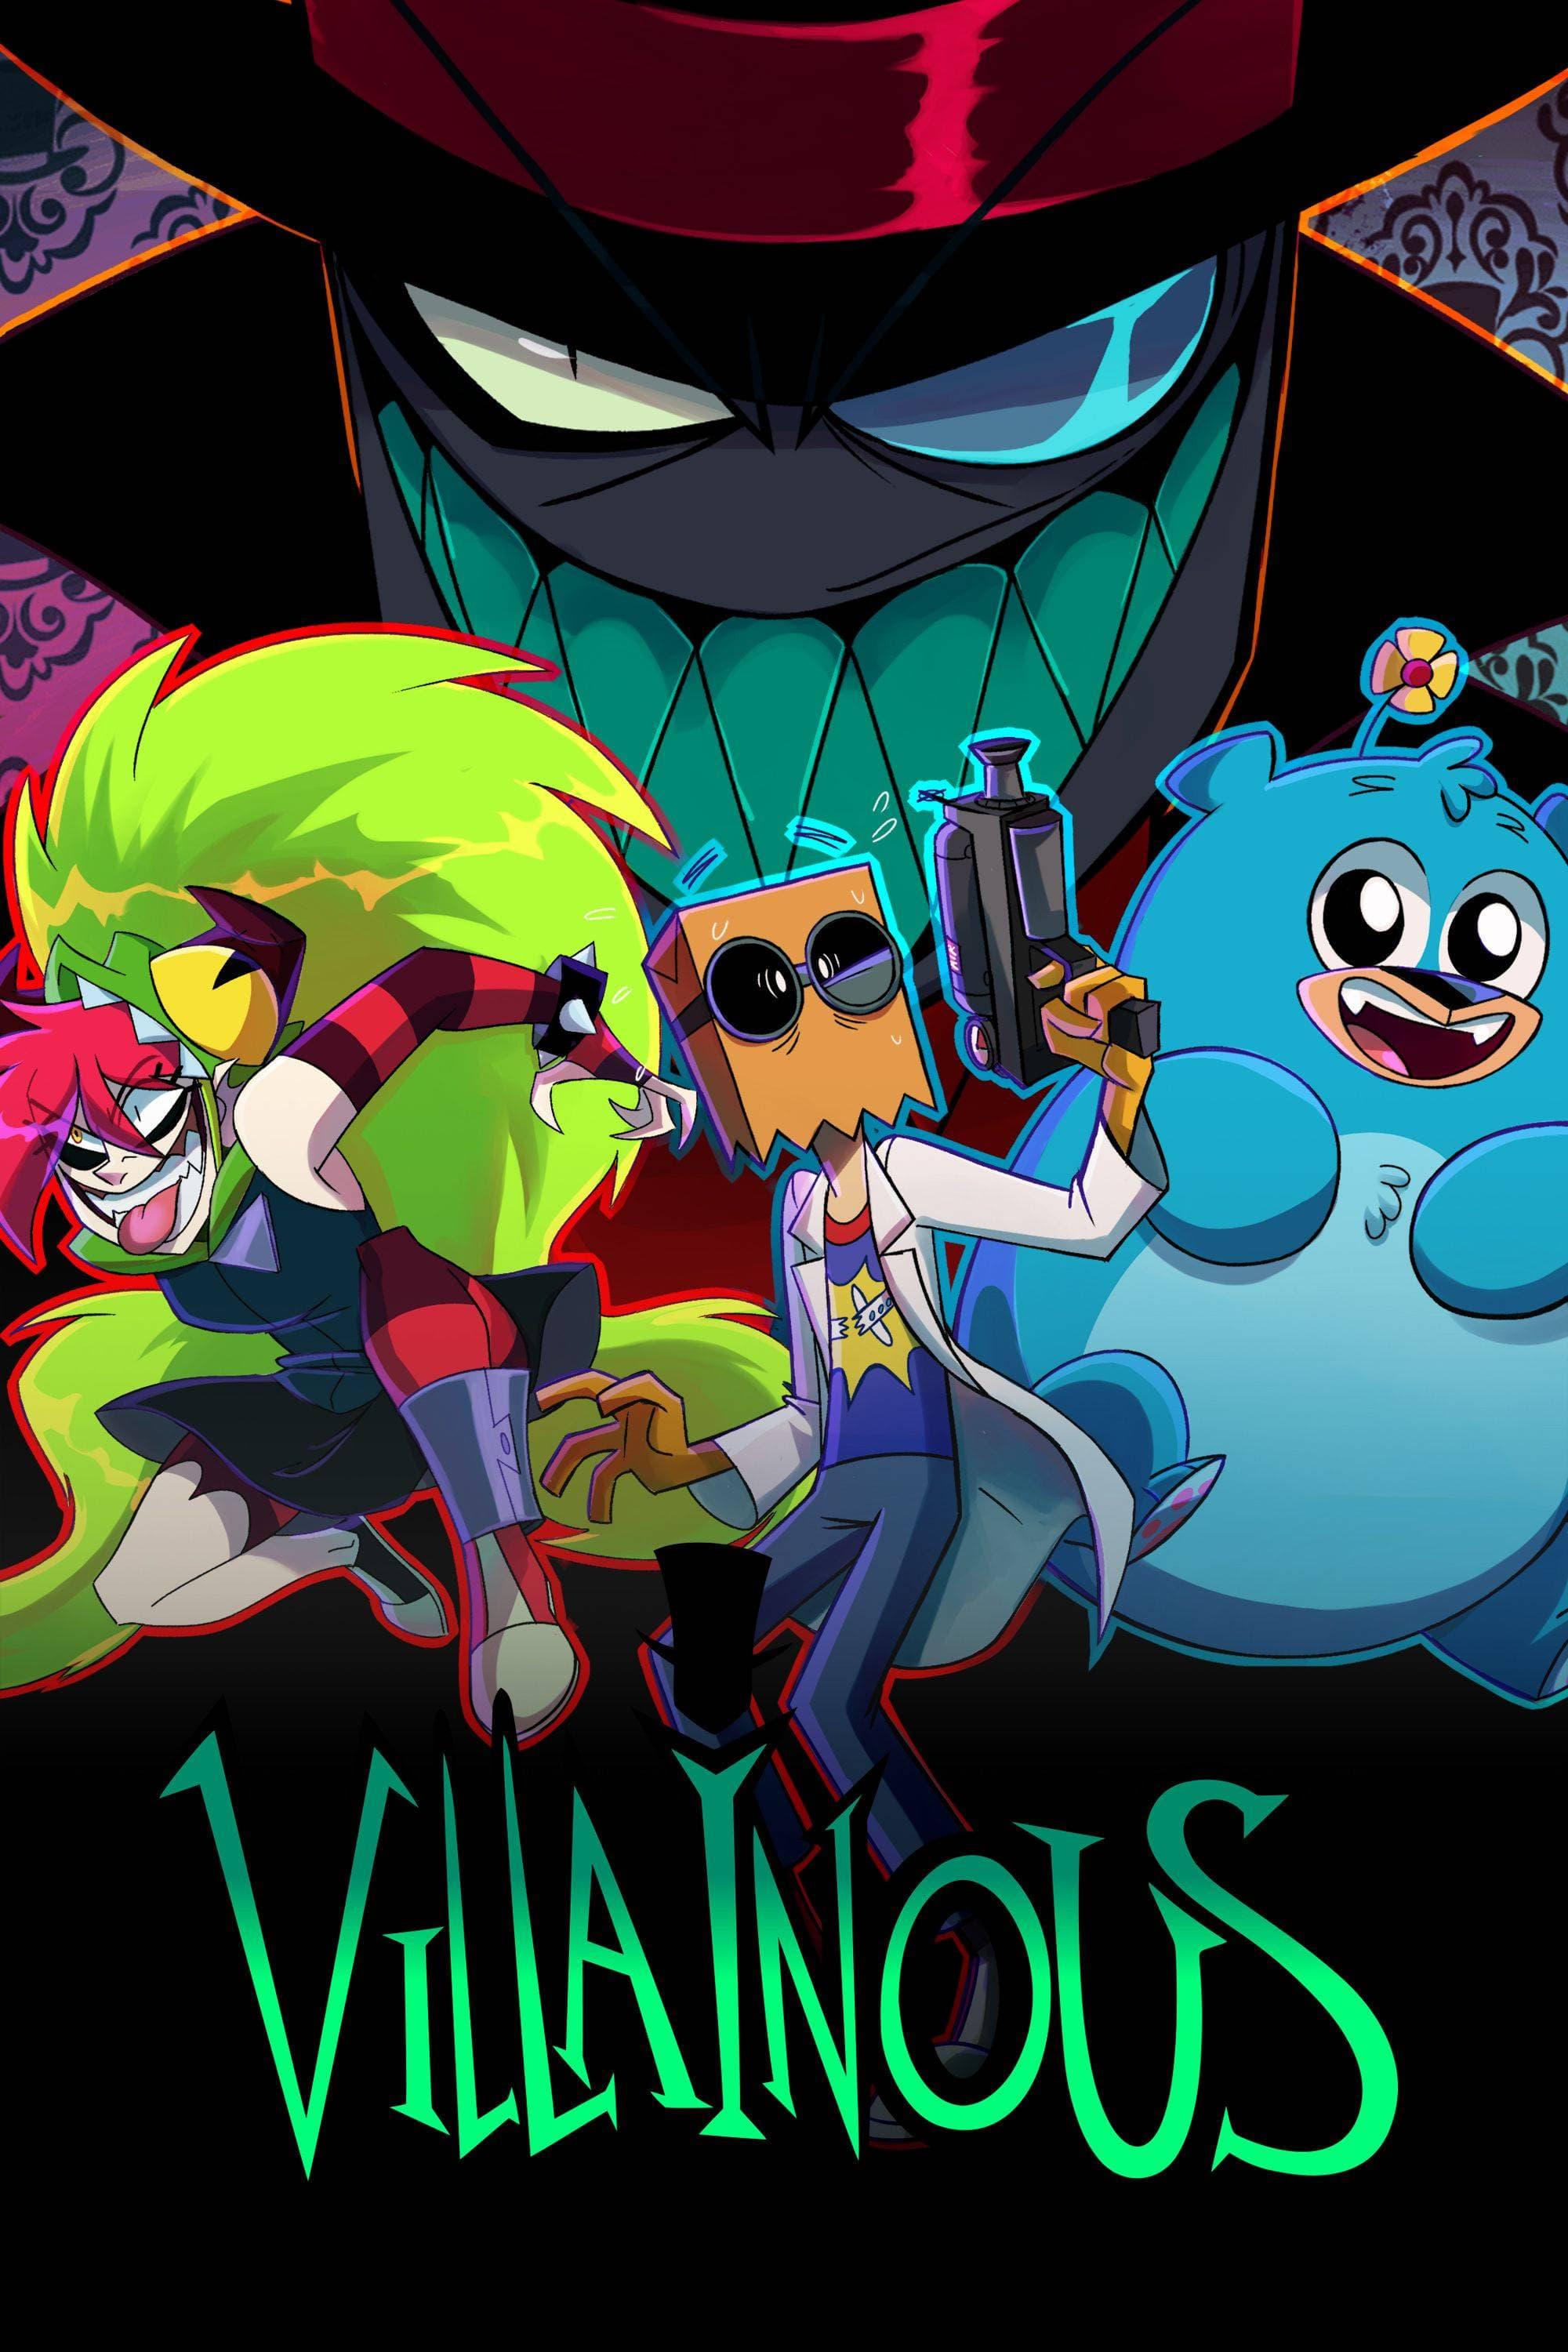 Villainous poster